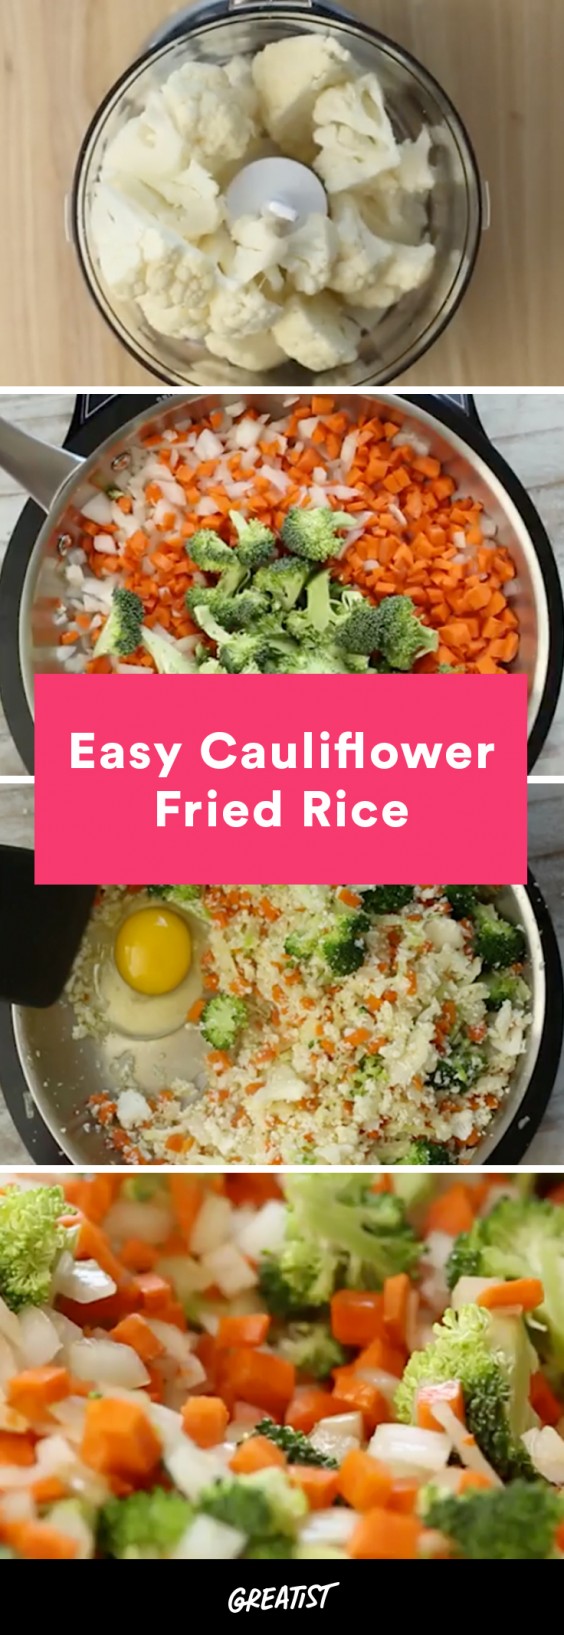 video: cauliflower fried rice